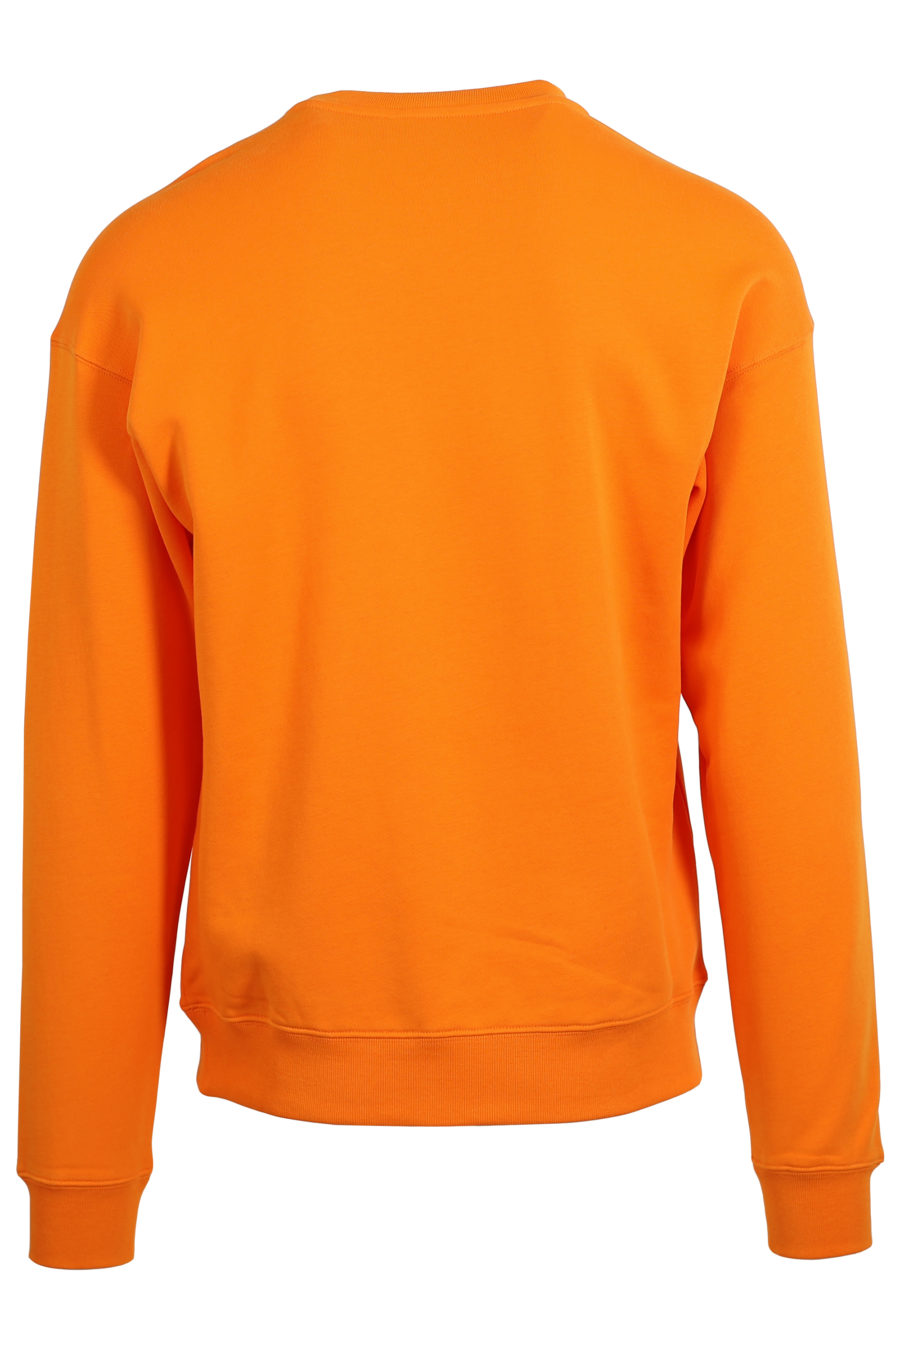 Sweatshirt laranja com logótipo grande à frente - IMG 0996